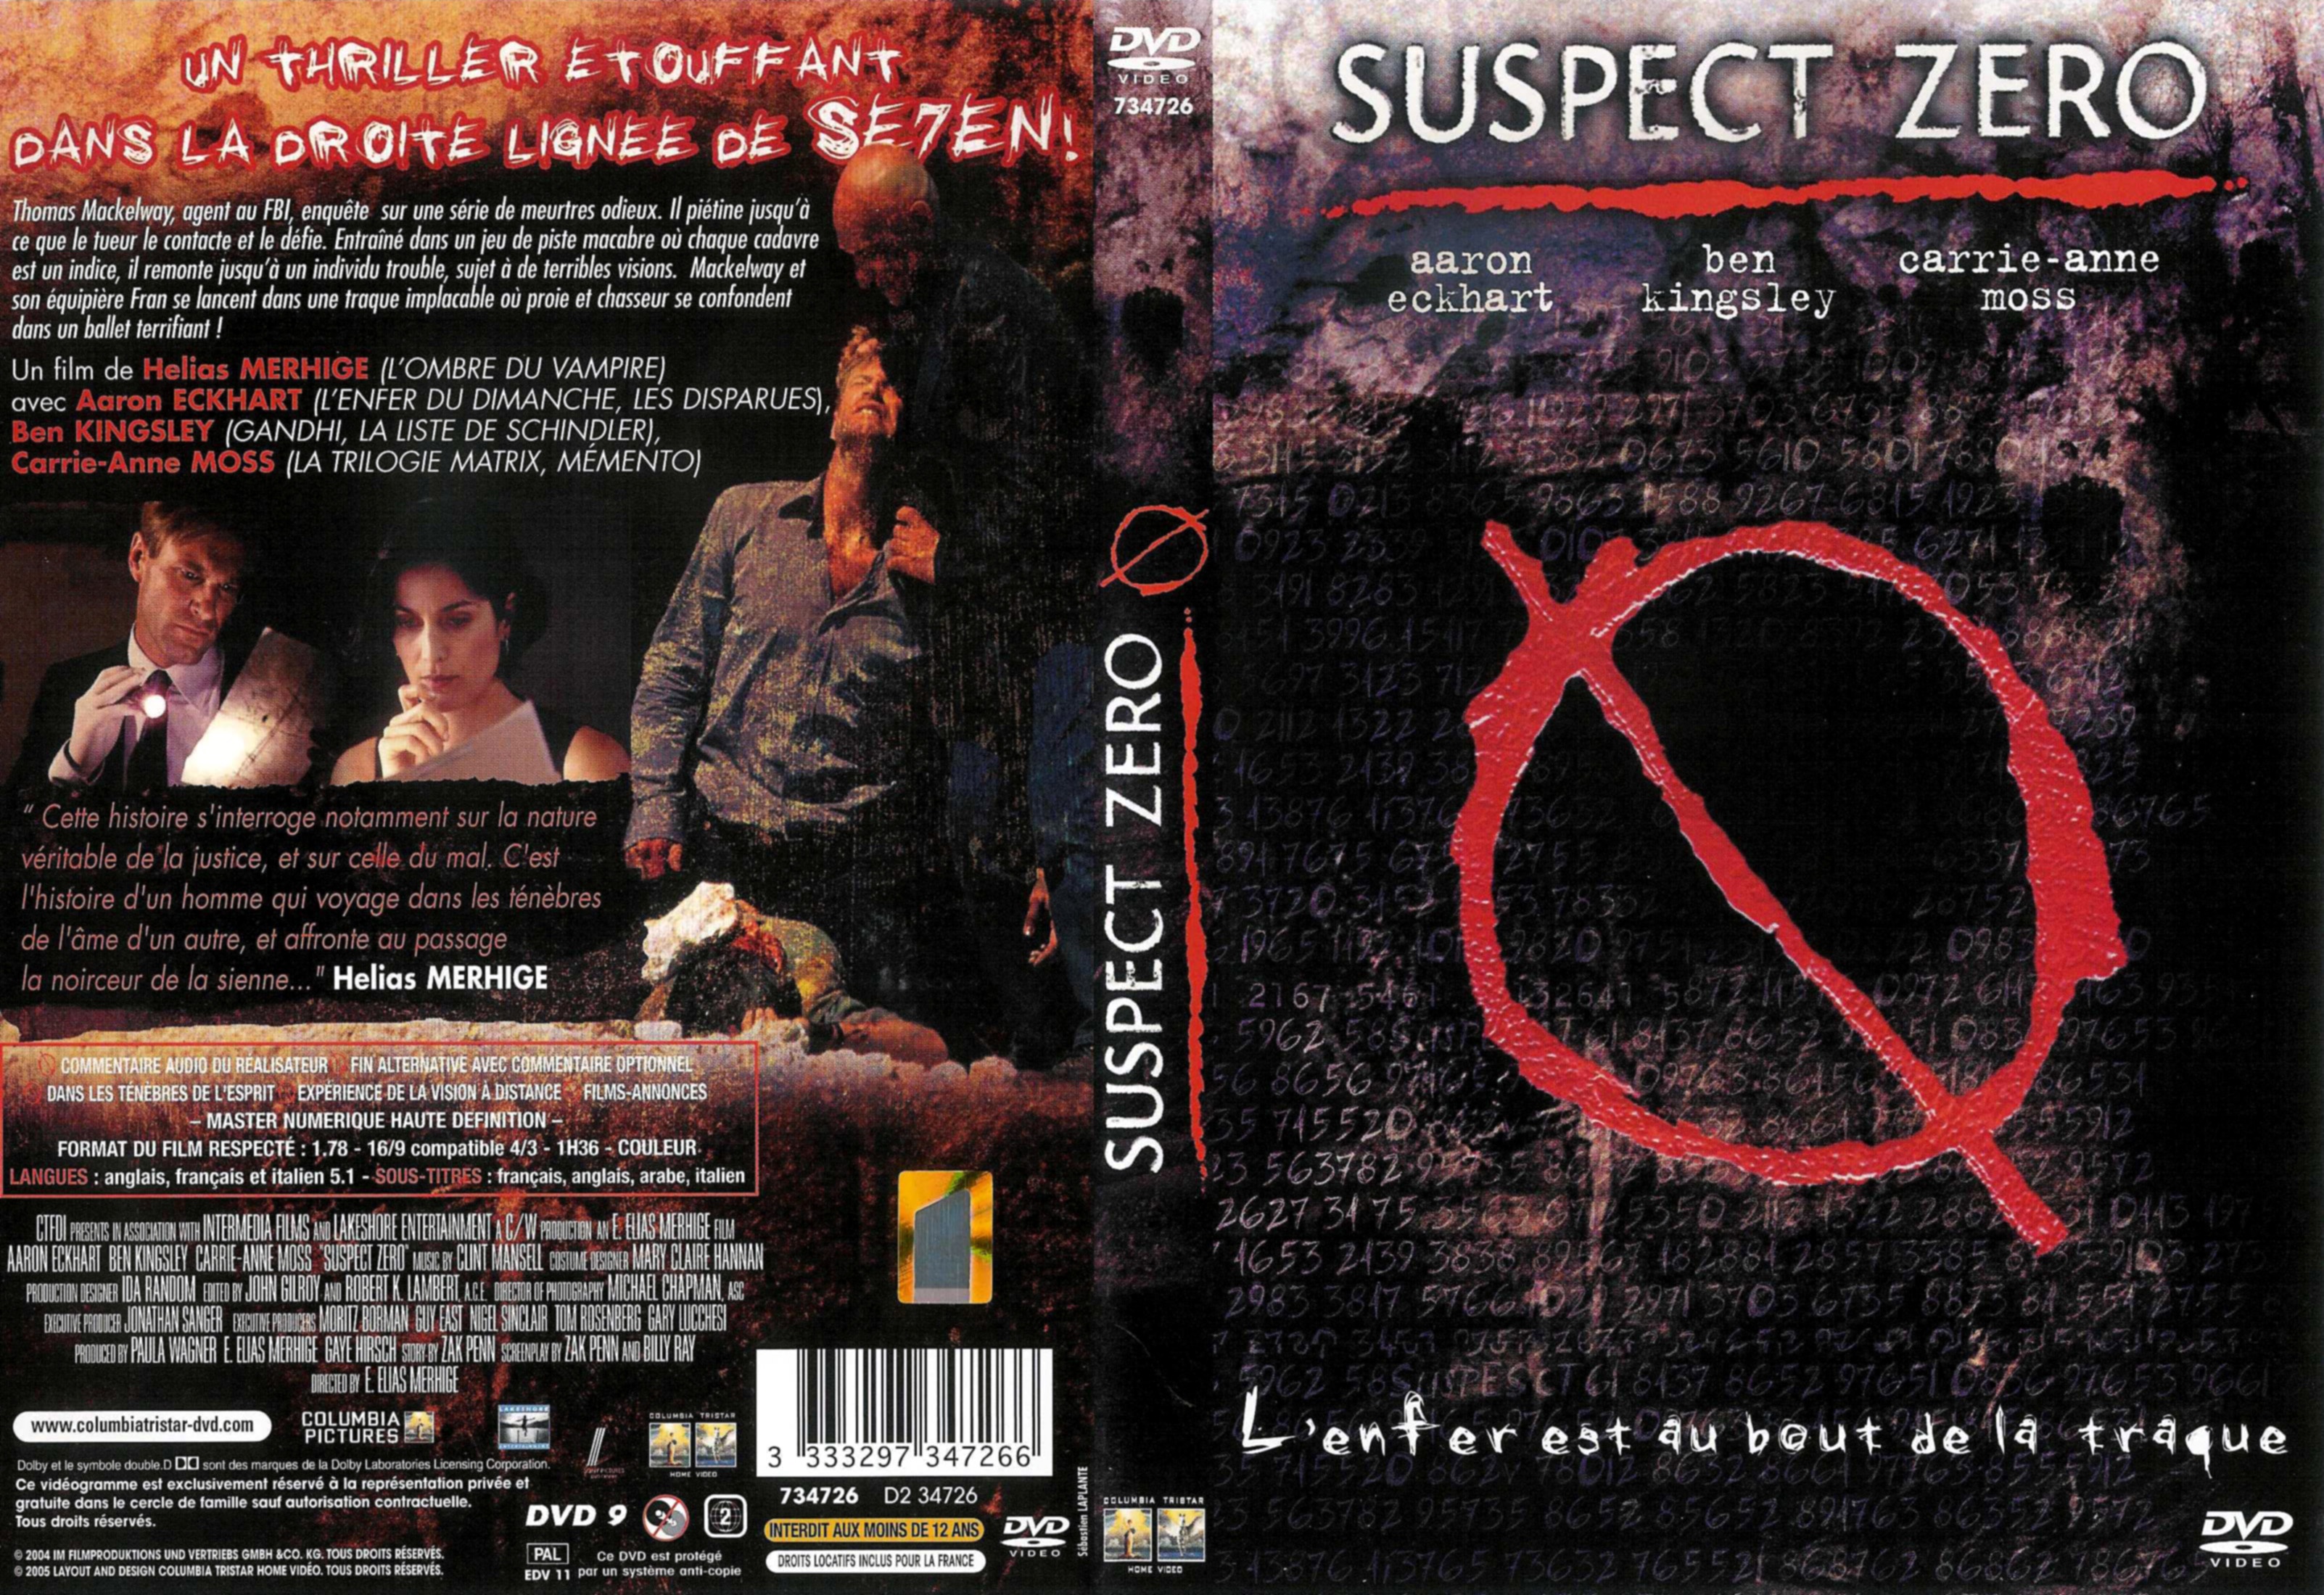 Jaquette DVD Suspect zero